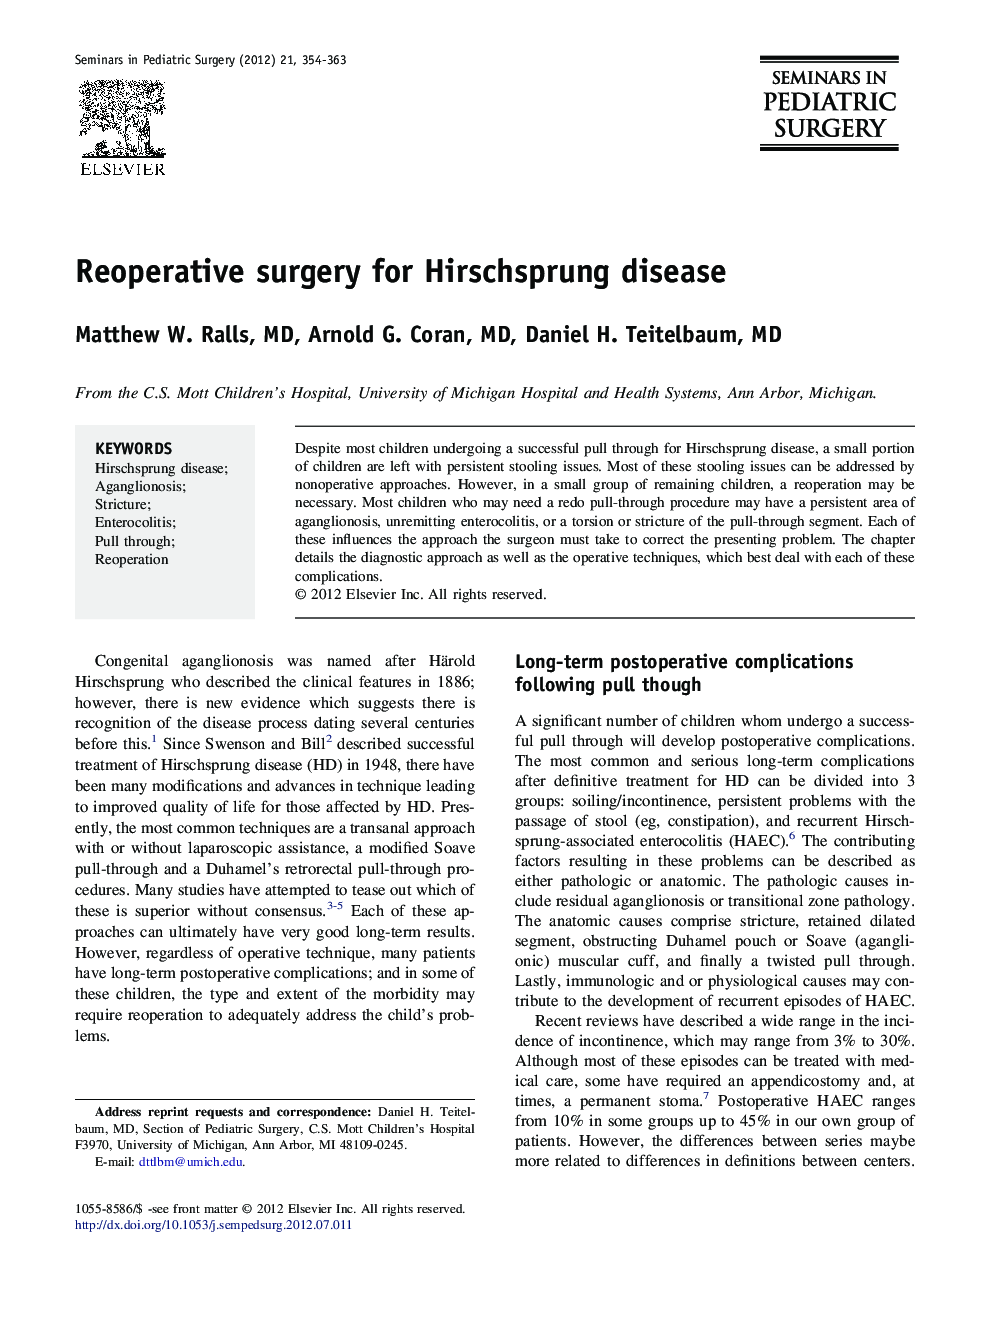 Reoperative surgery for Hirschsprung disease